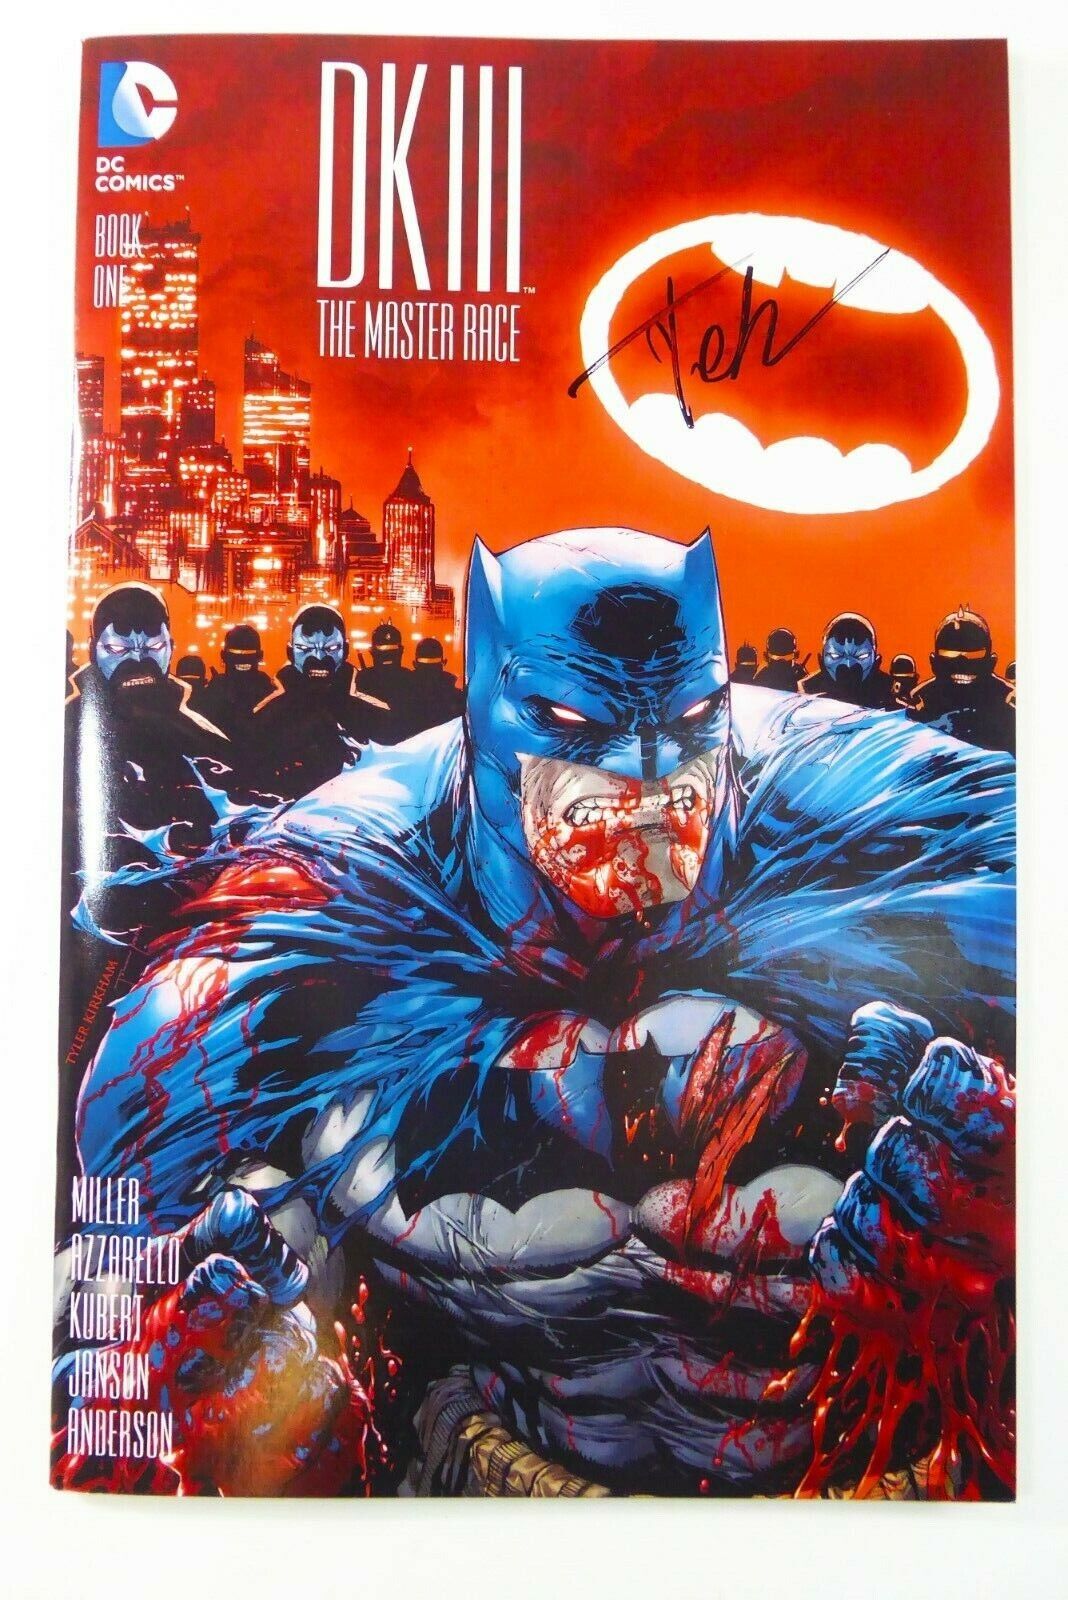 DC DK III #1 Batman Hastings VARIANT Signed by TYLER KIRKHAM (No COA) NM (9.4)